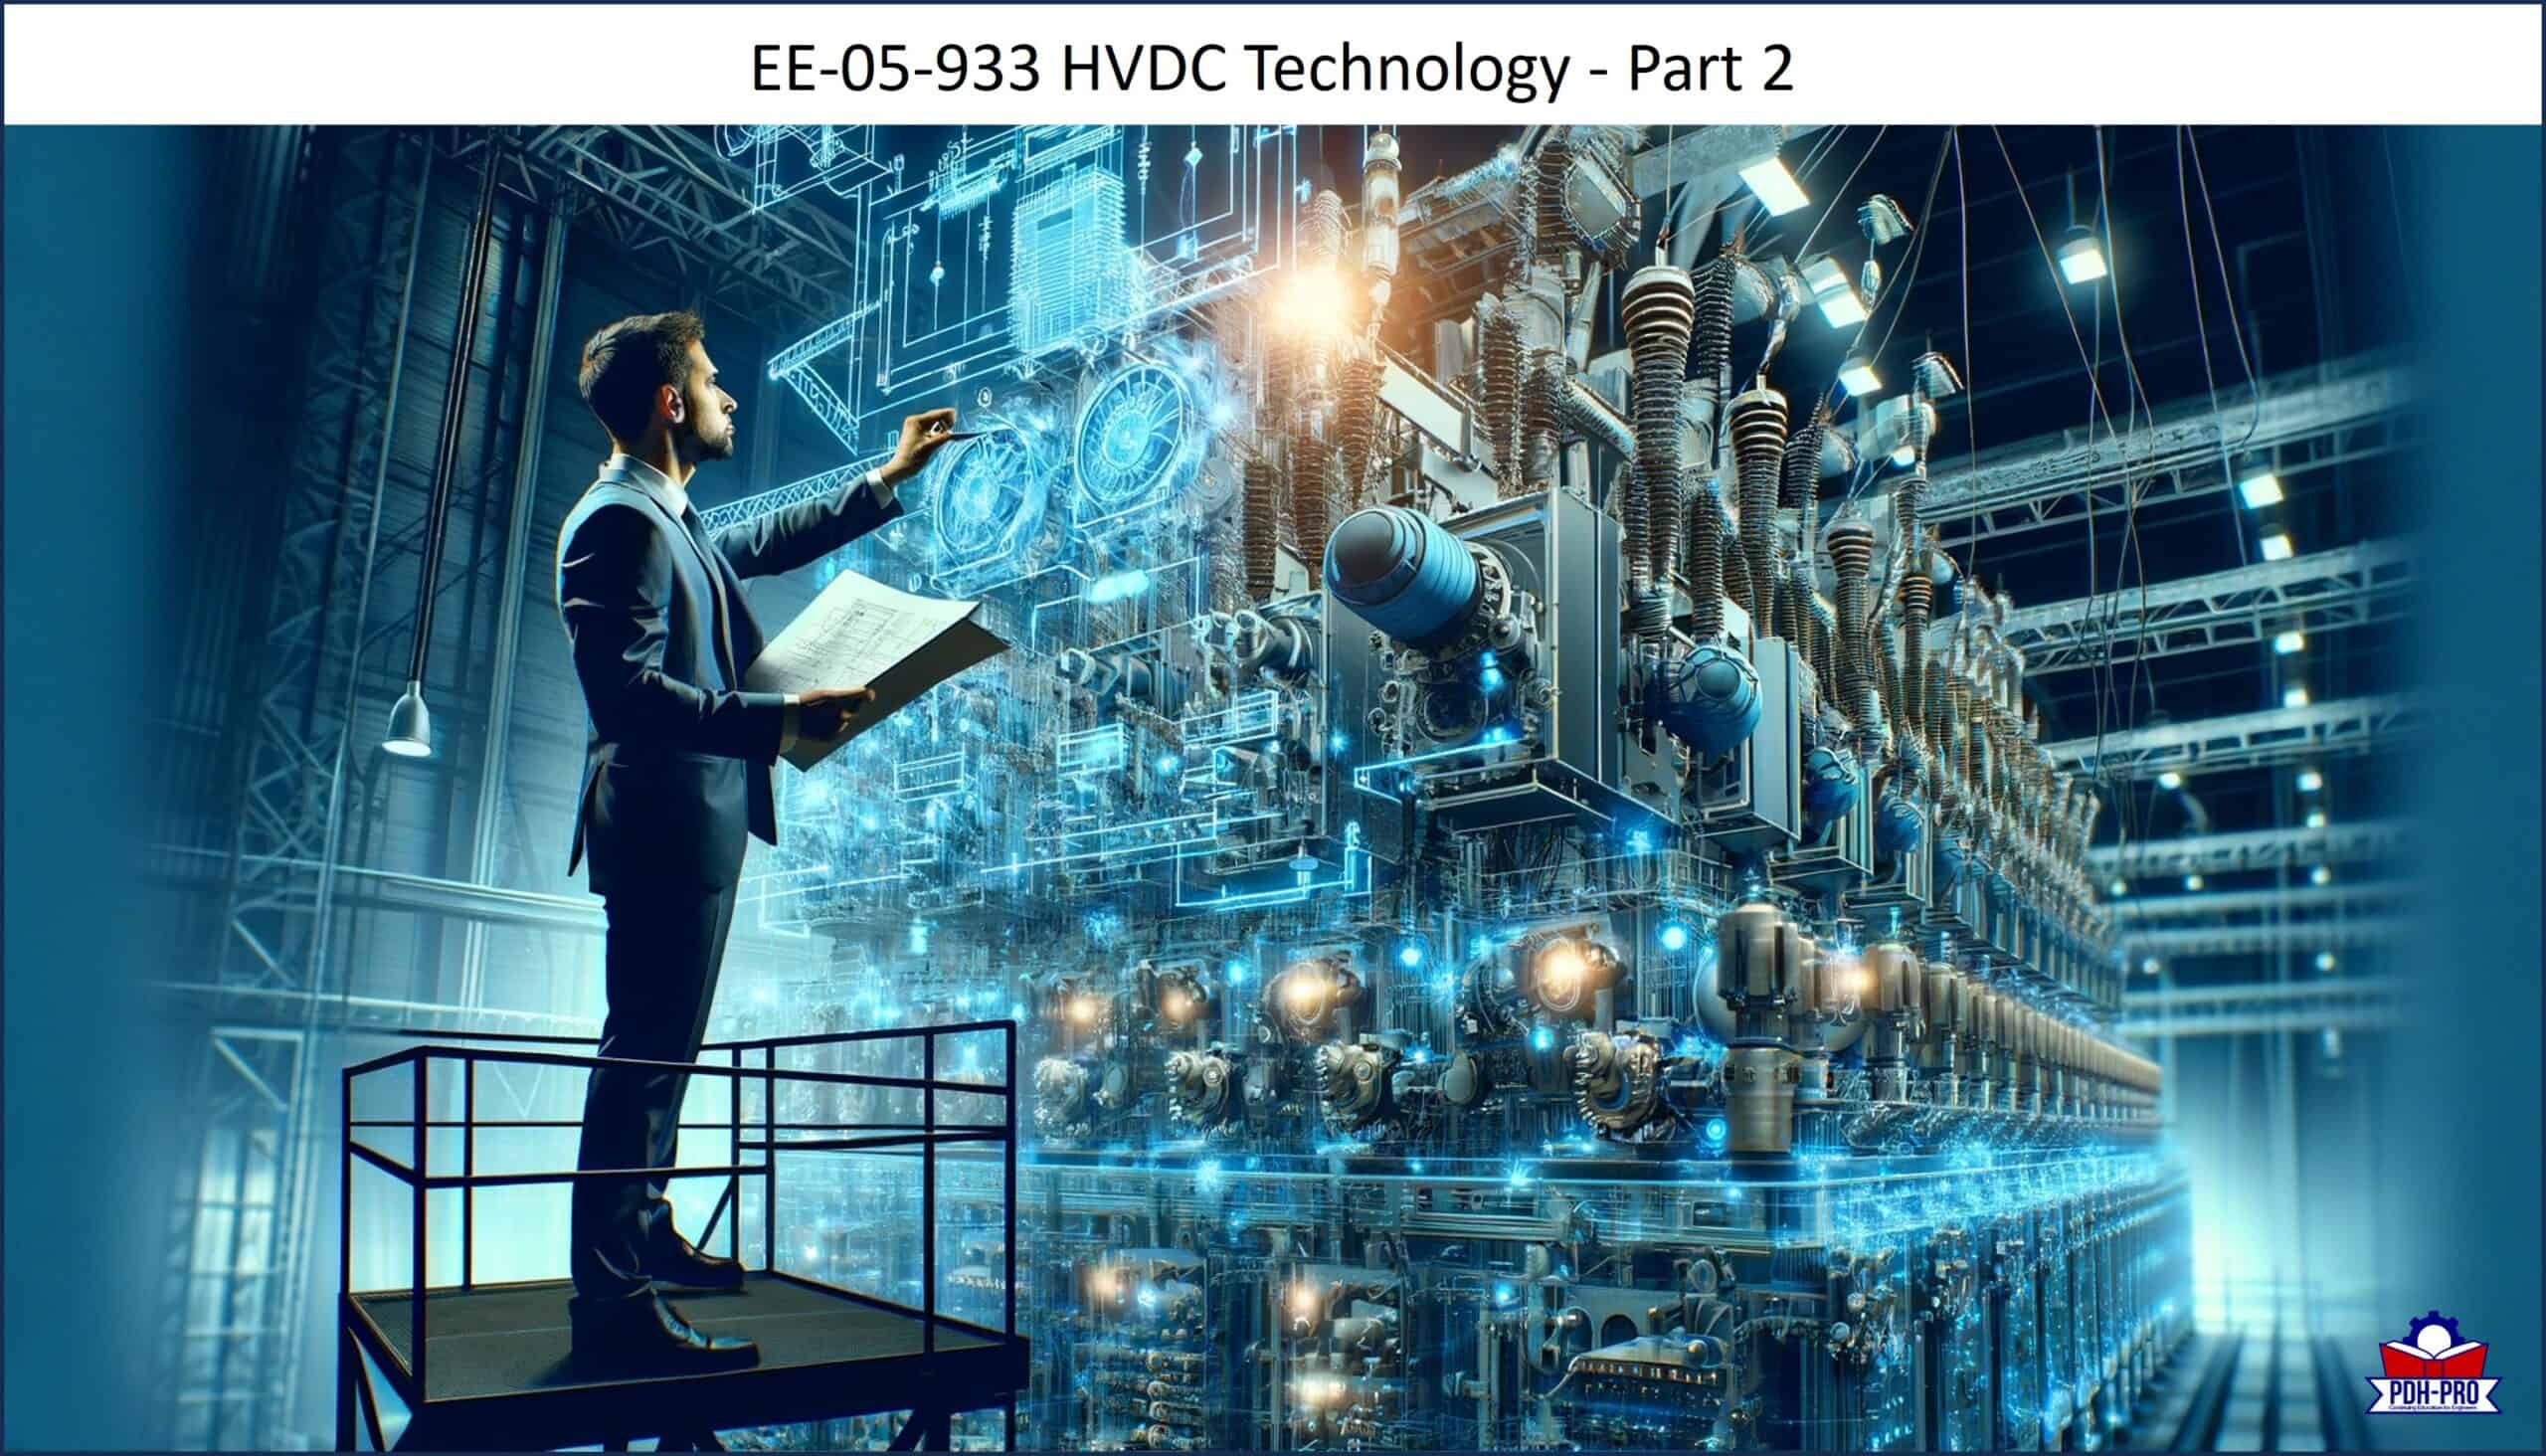 HVDC Technology - Part 2